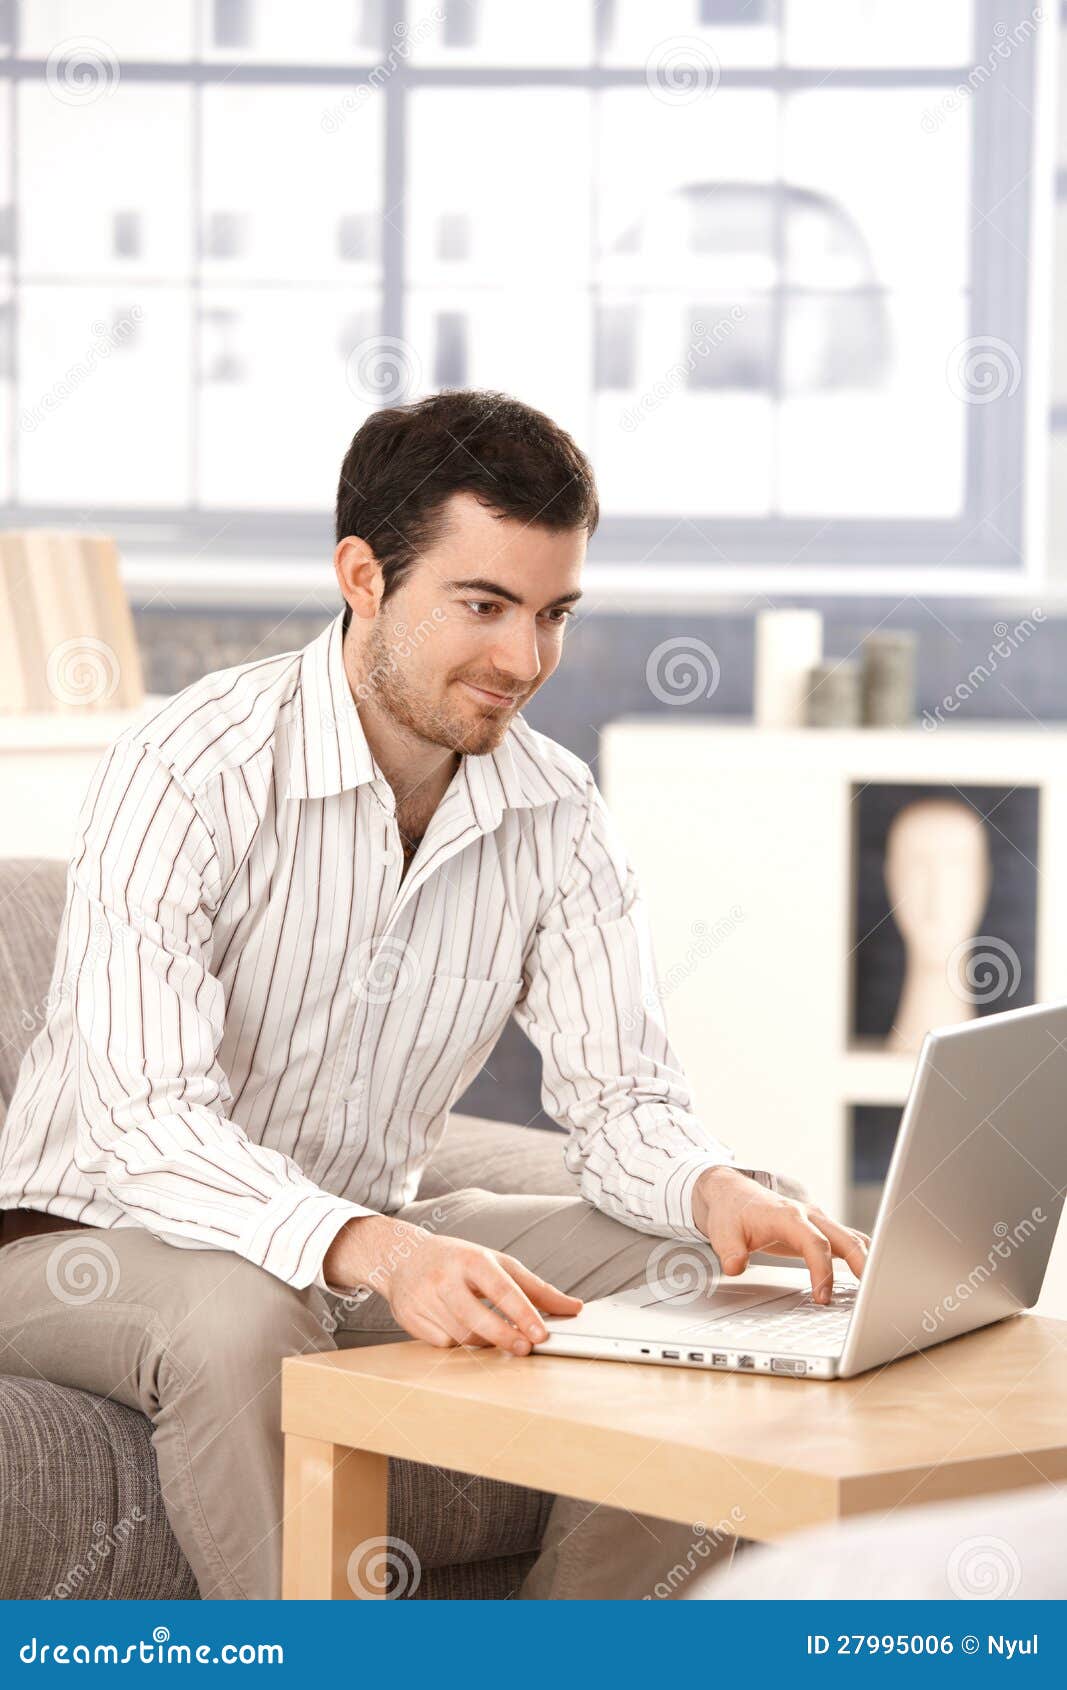 young-man-browsing-internet-home-smiling-27995006.jpg